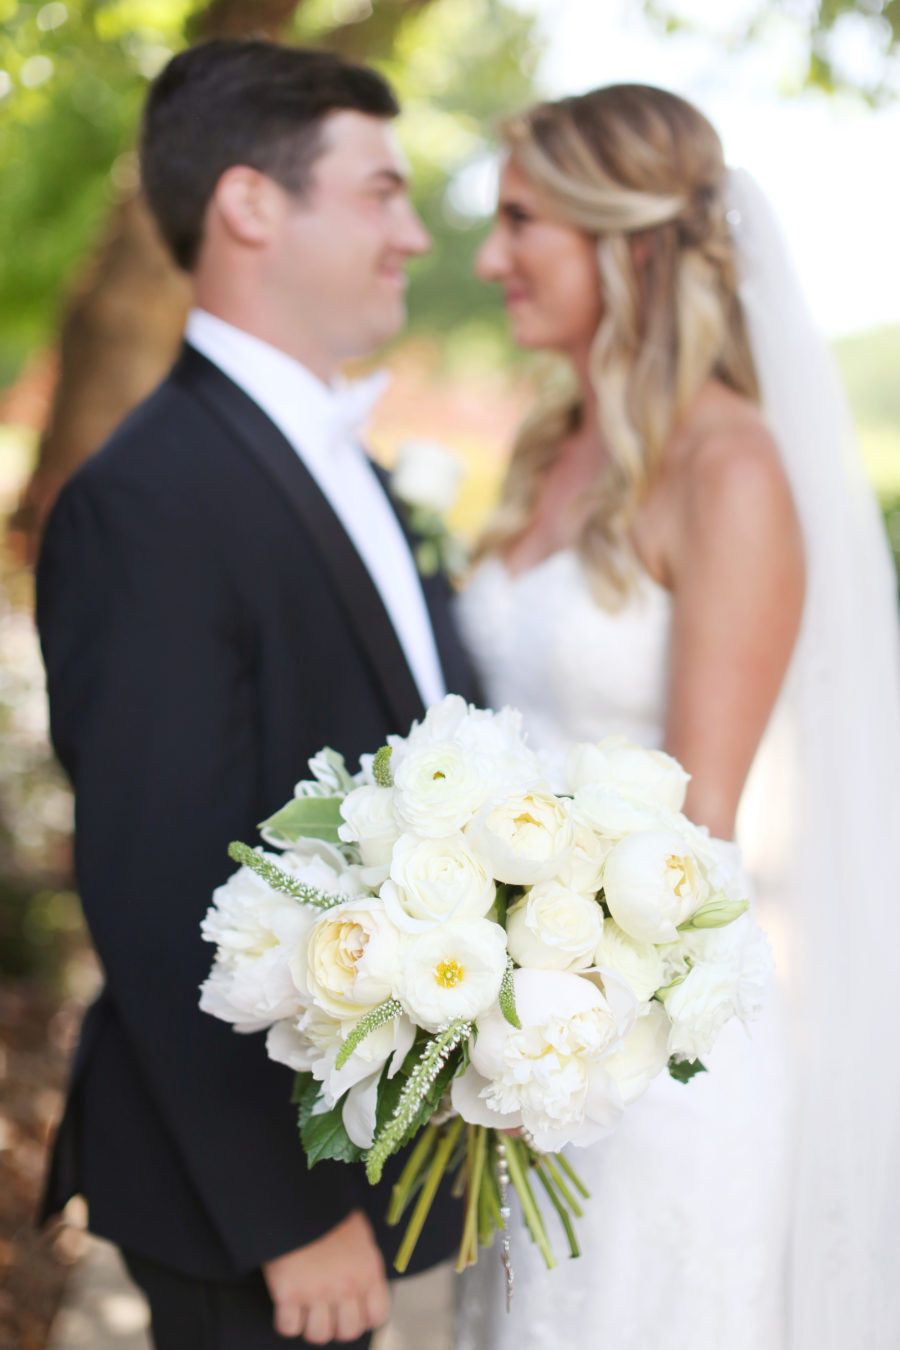 Emily Taylor Weddings Floral Design featured on Nashville Bride Guide